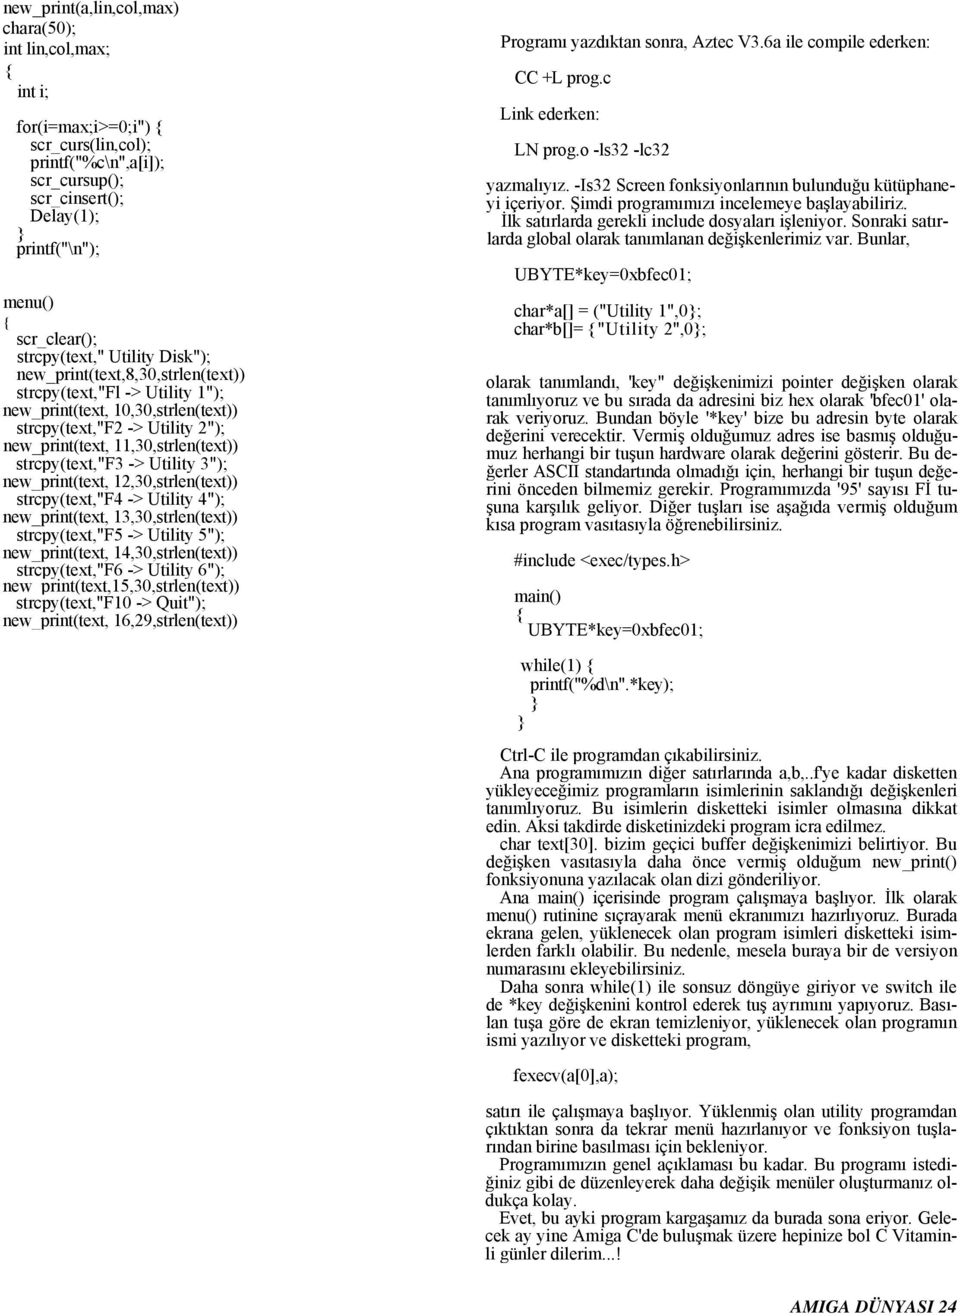 strcpy(text,"f3 -> Utility 3"); new_print(text, 12,30,strlen(text)) strcpy(text,"f4 -> Utility 4"); new_print(text, 13,30,strlen(text)) strcpy(text,"f5 -> Utility 5"); new_print(text,